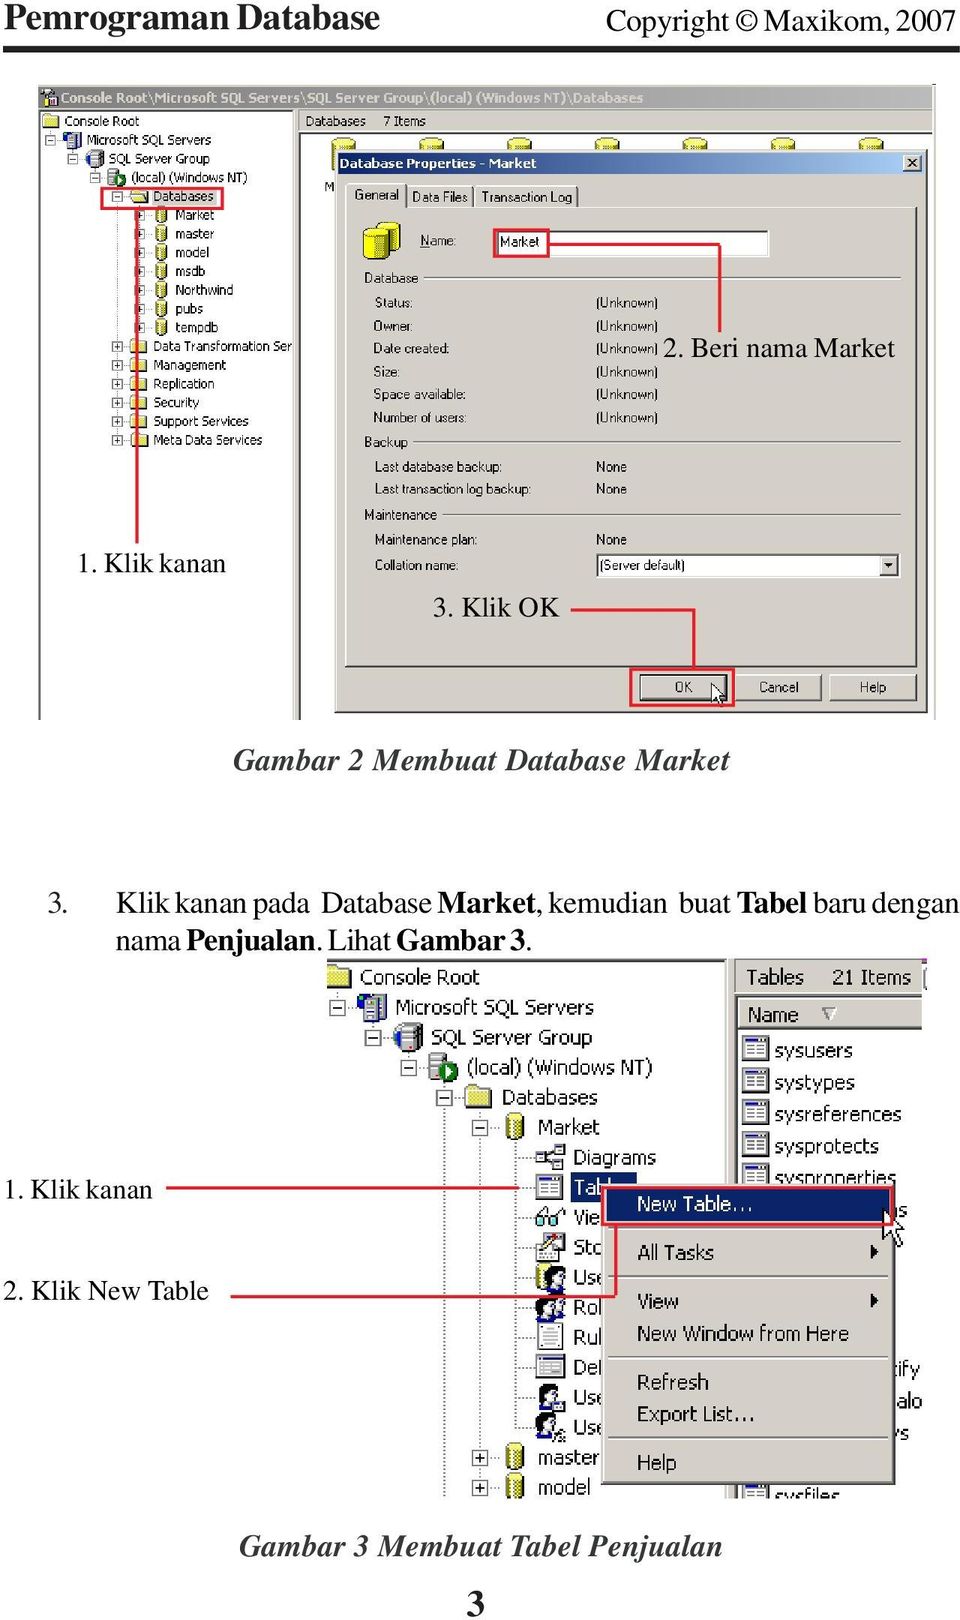 Klik kanan pada Database Market, kemudian buat Tabel baru